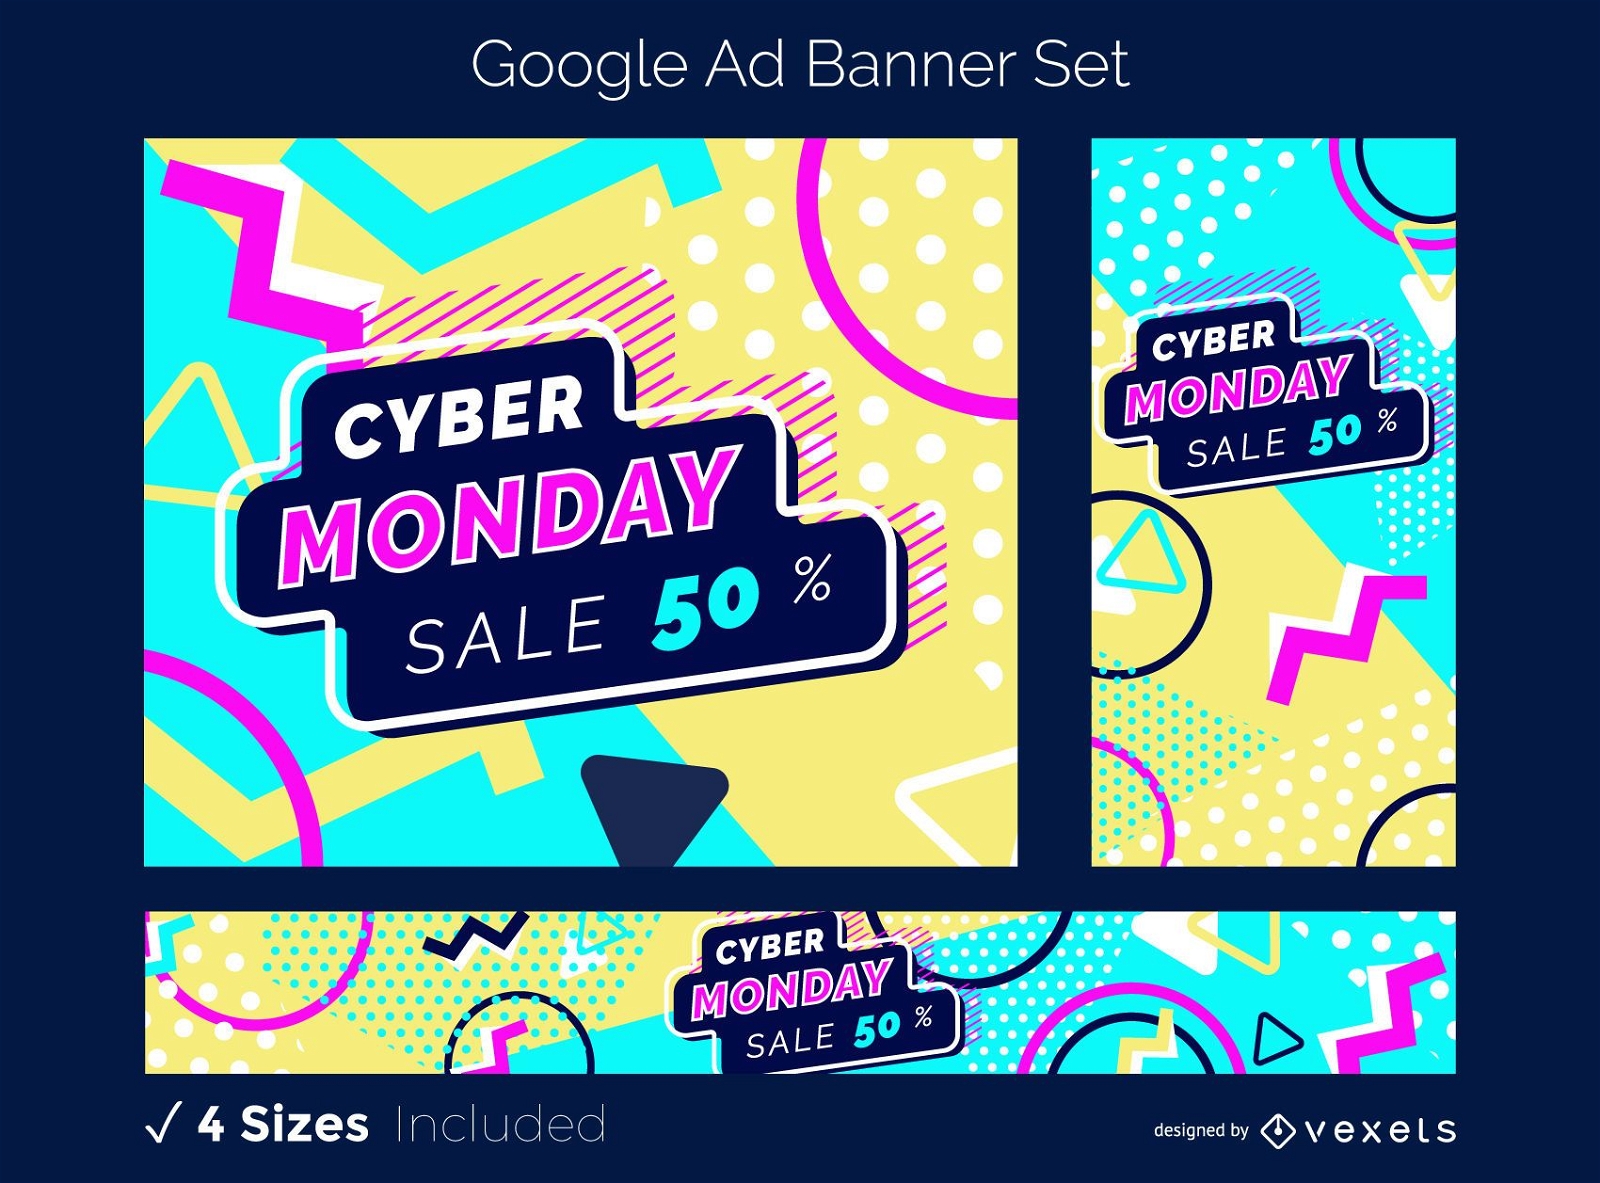 Cyber Monday Google Ads Banner Set